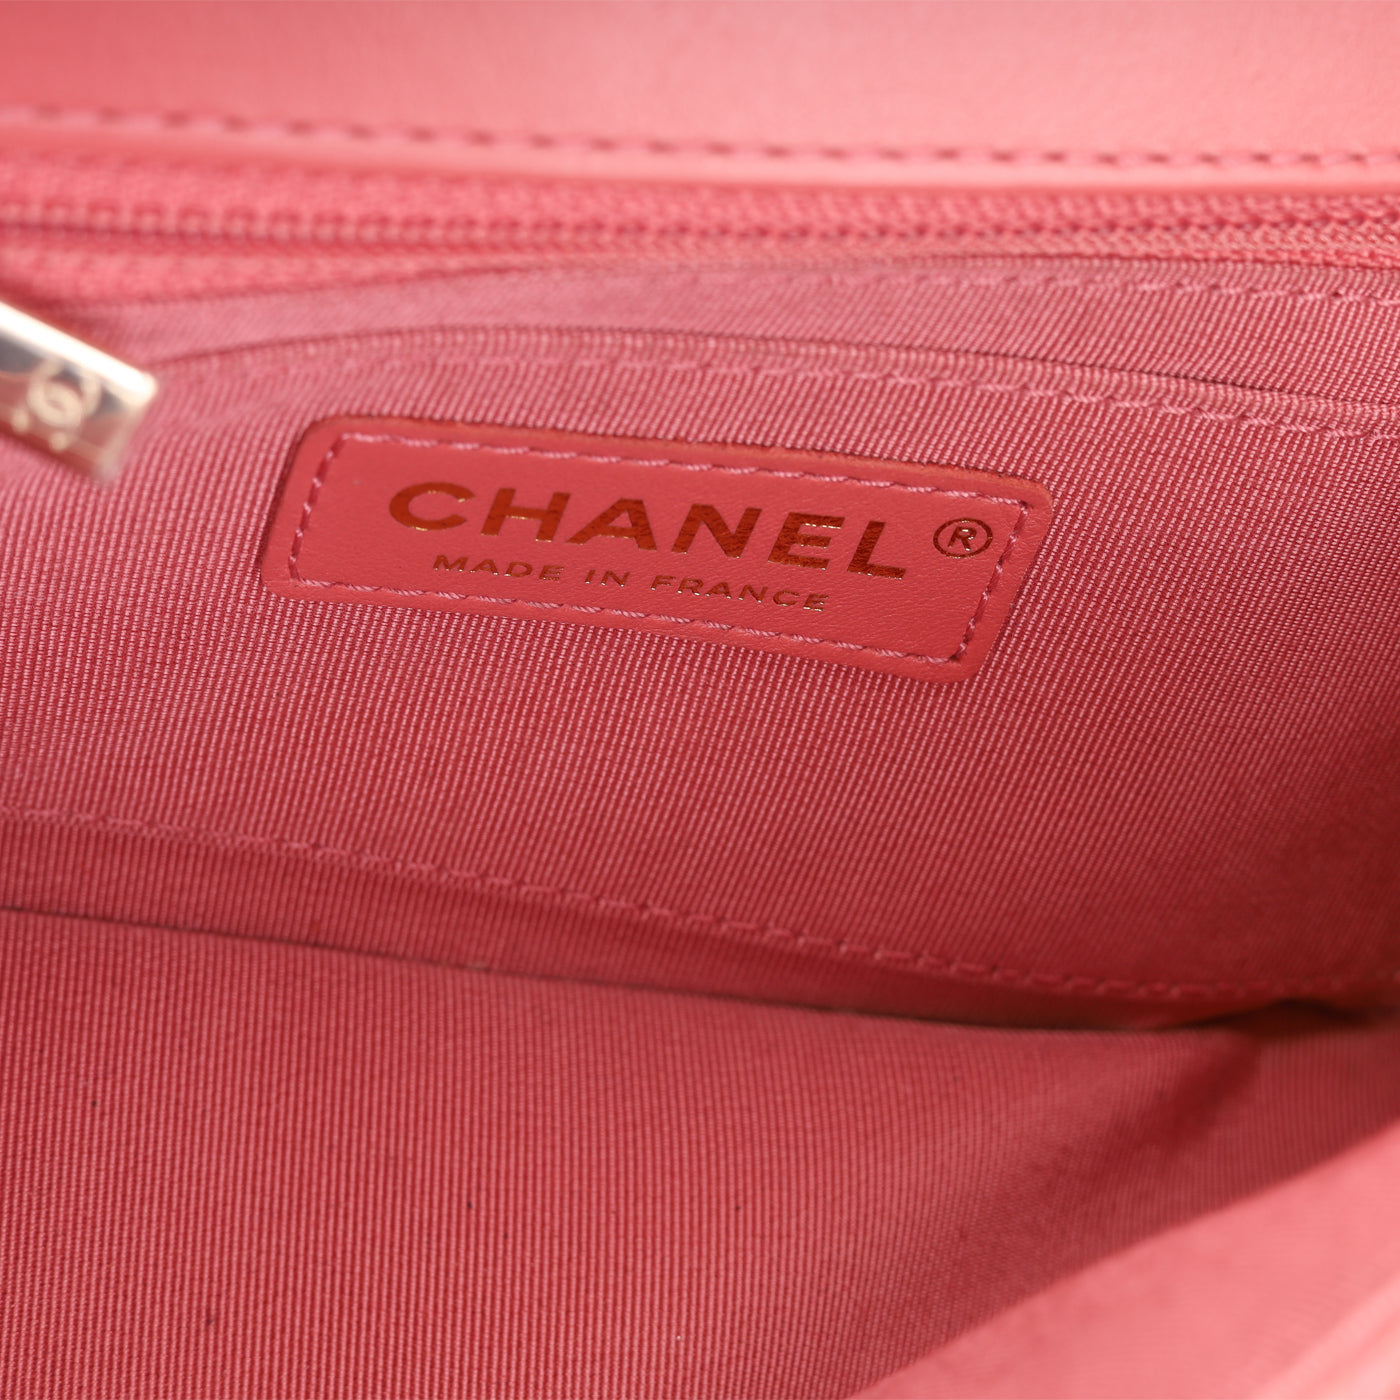 Chanel Black Leather Medium Filigree CC Flap Bag